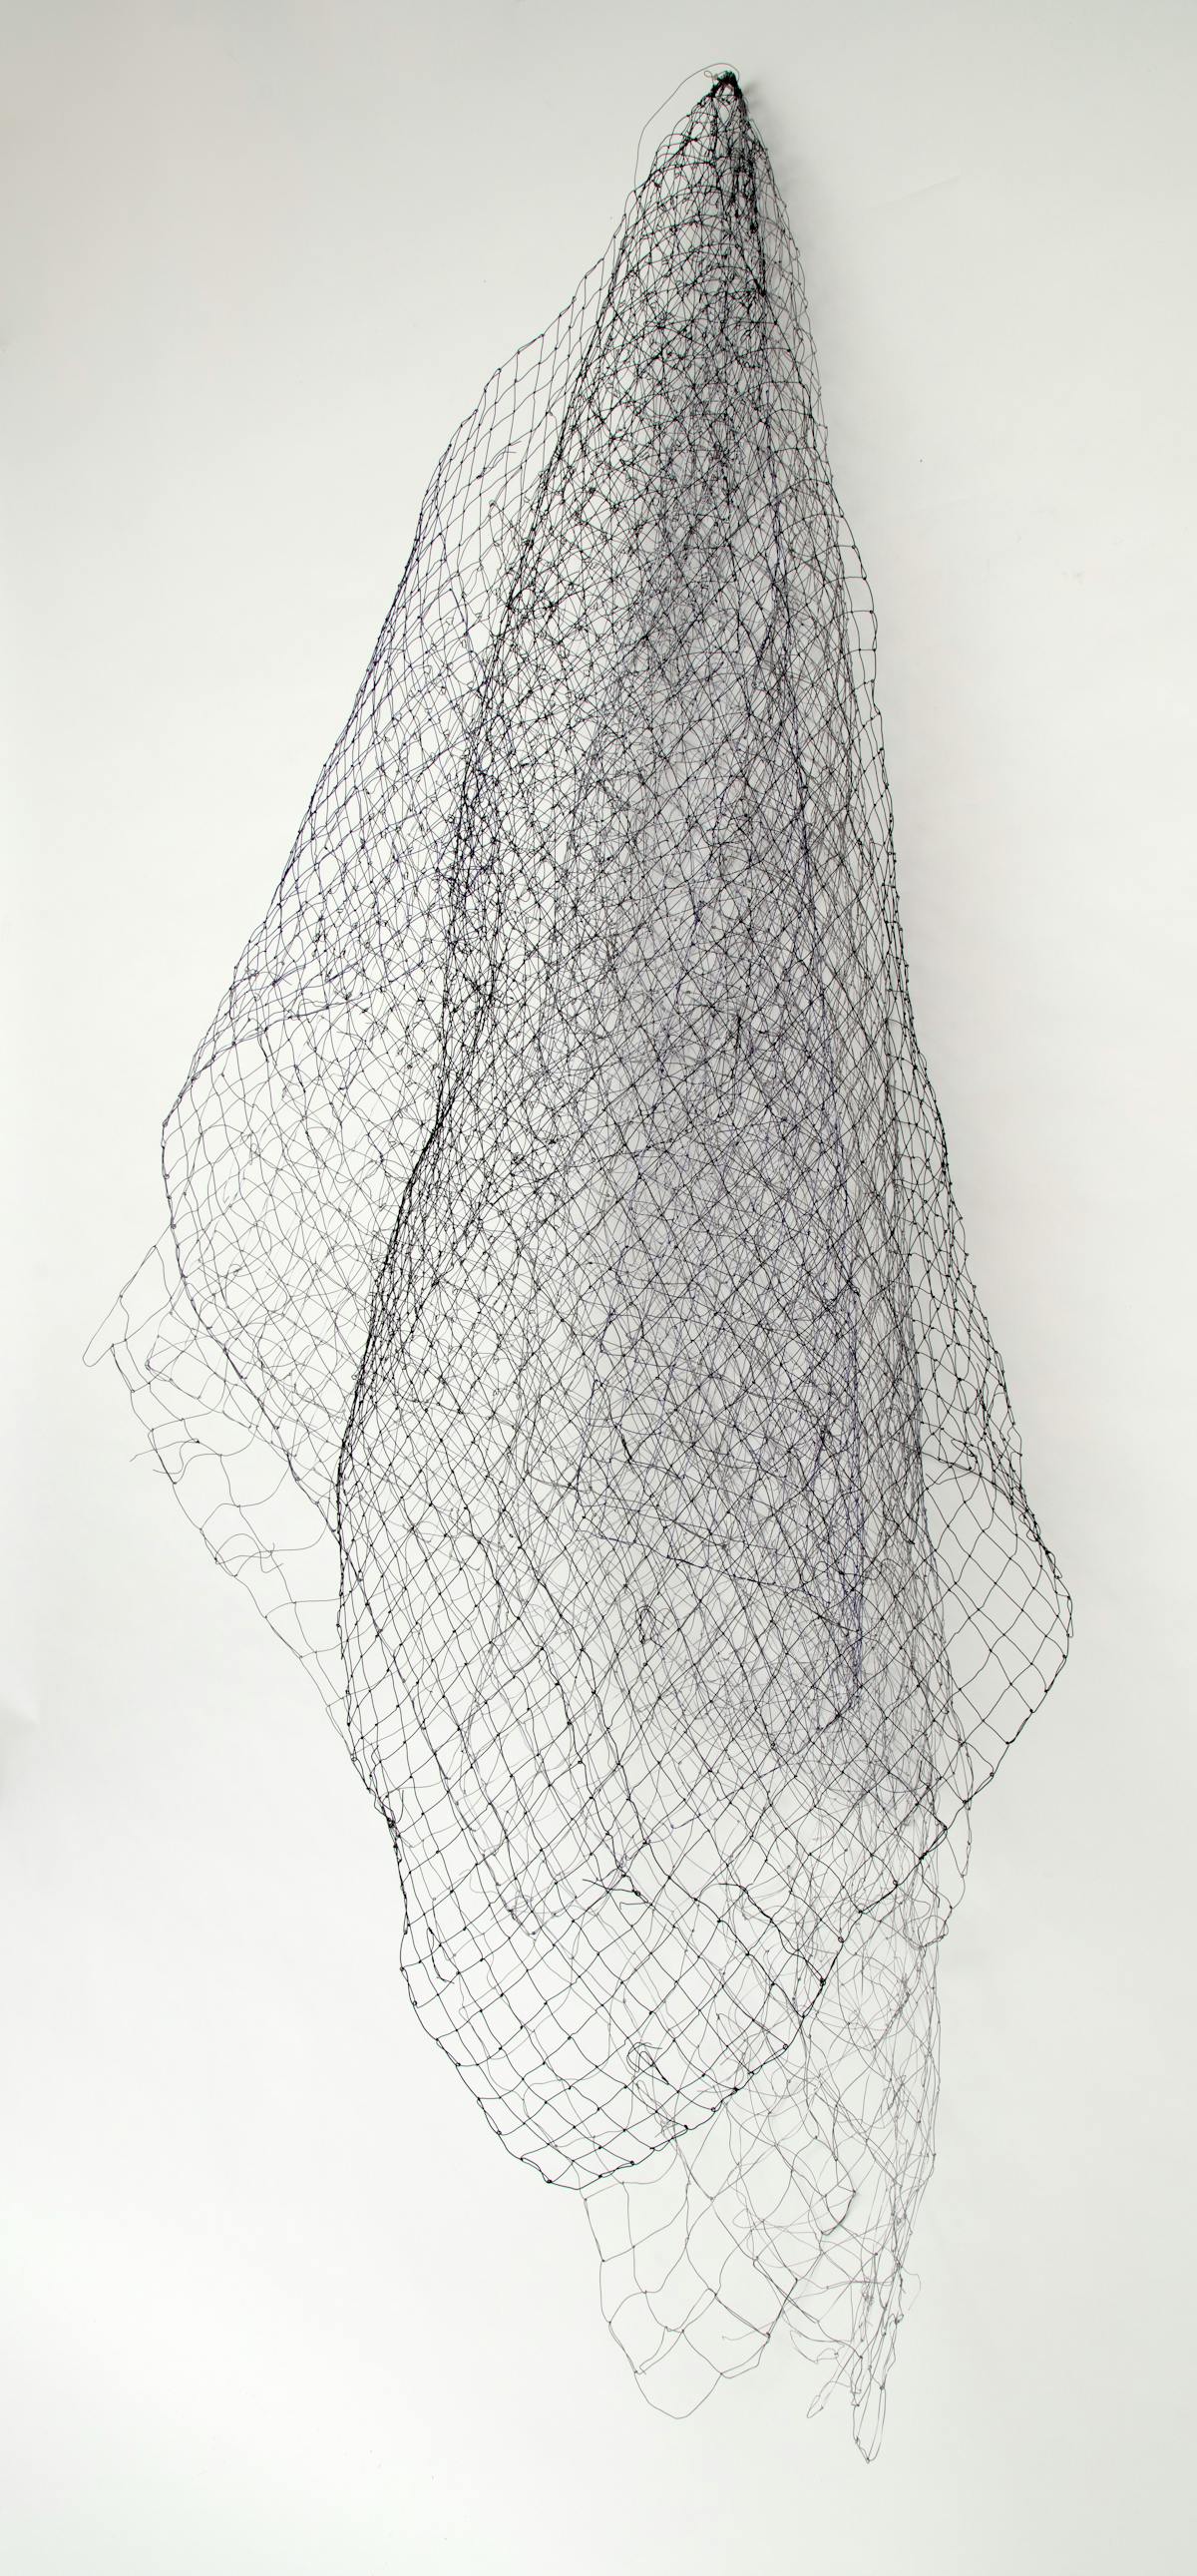 netlike textile artwork displayed as if draped on a hook